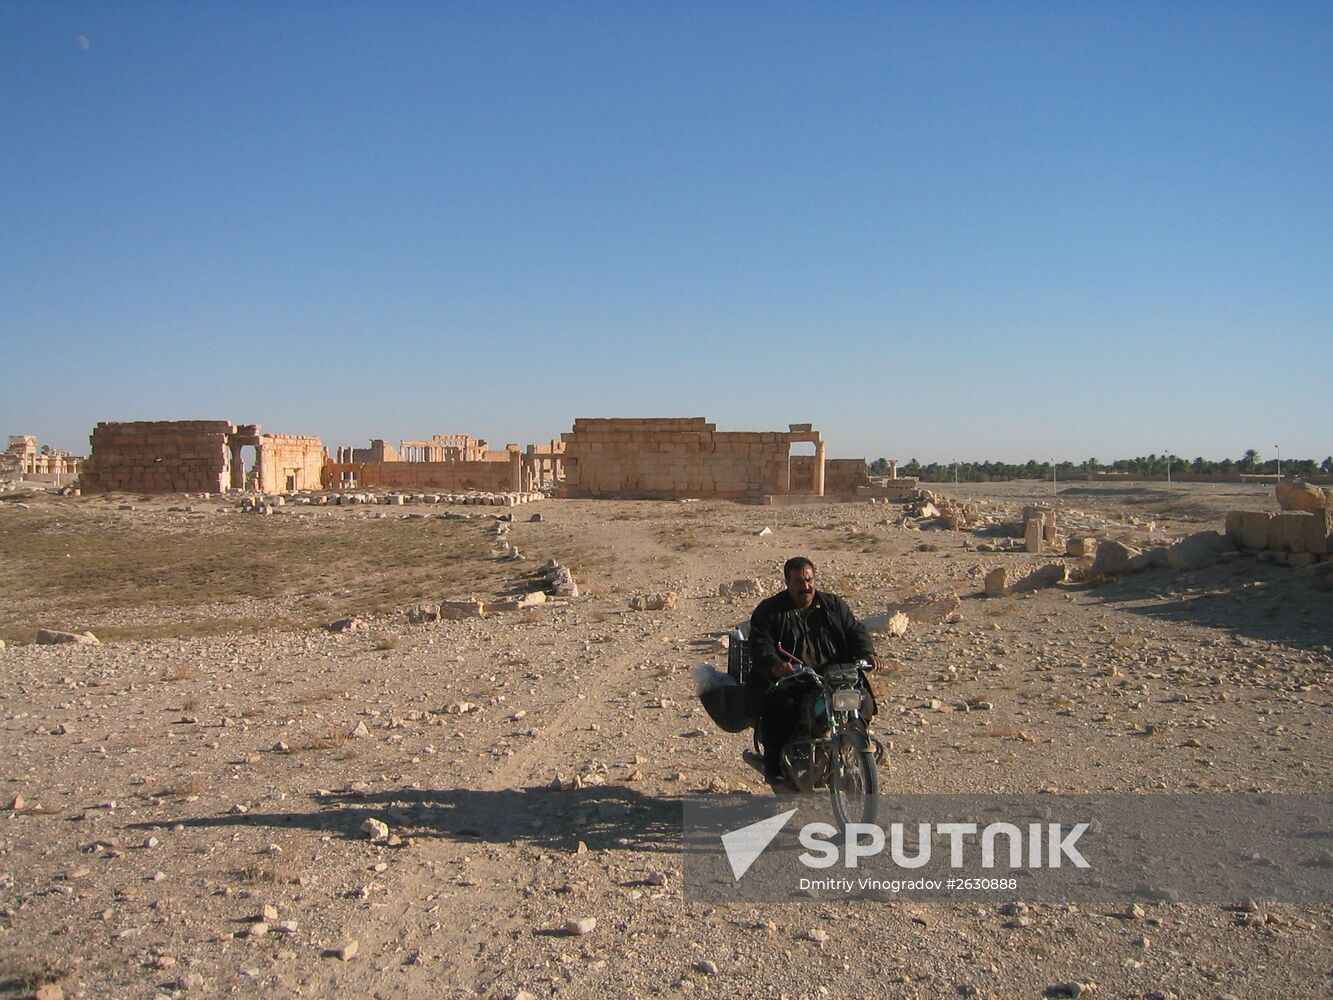 Ruins of ancient city of Palmyra